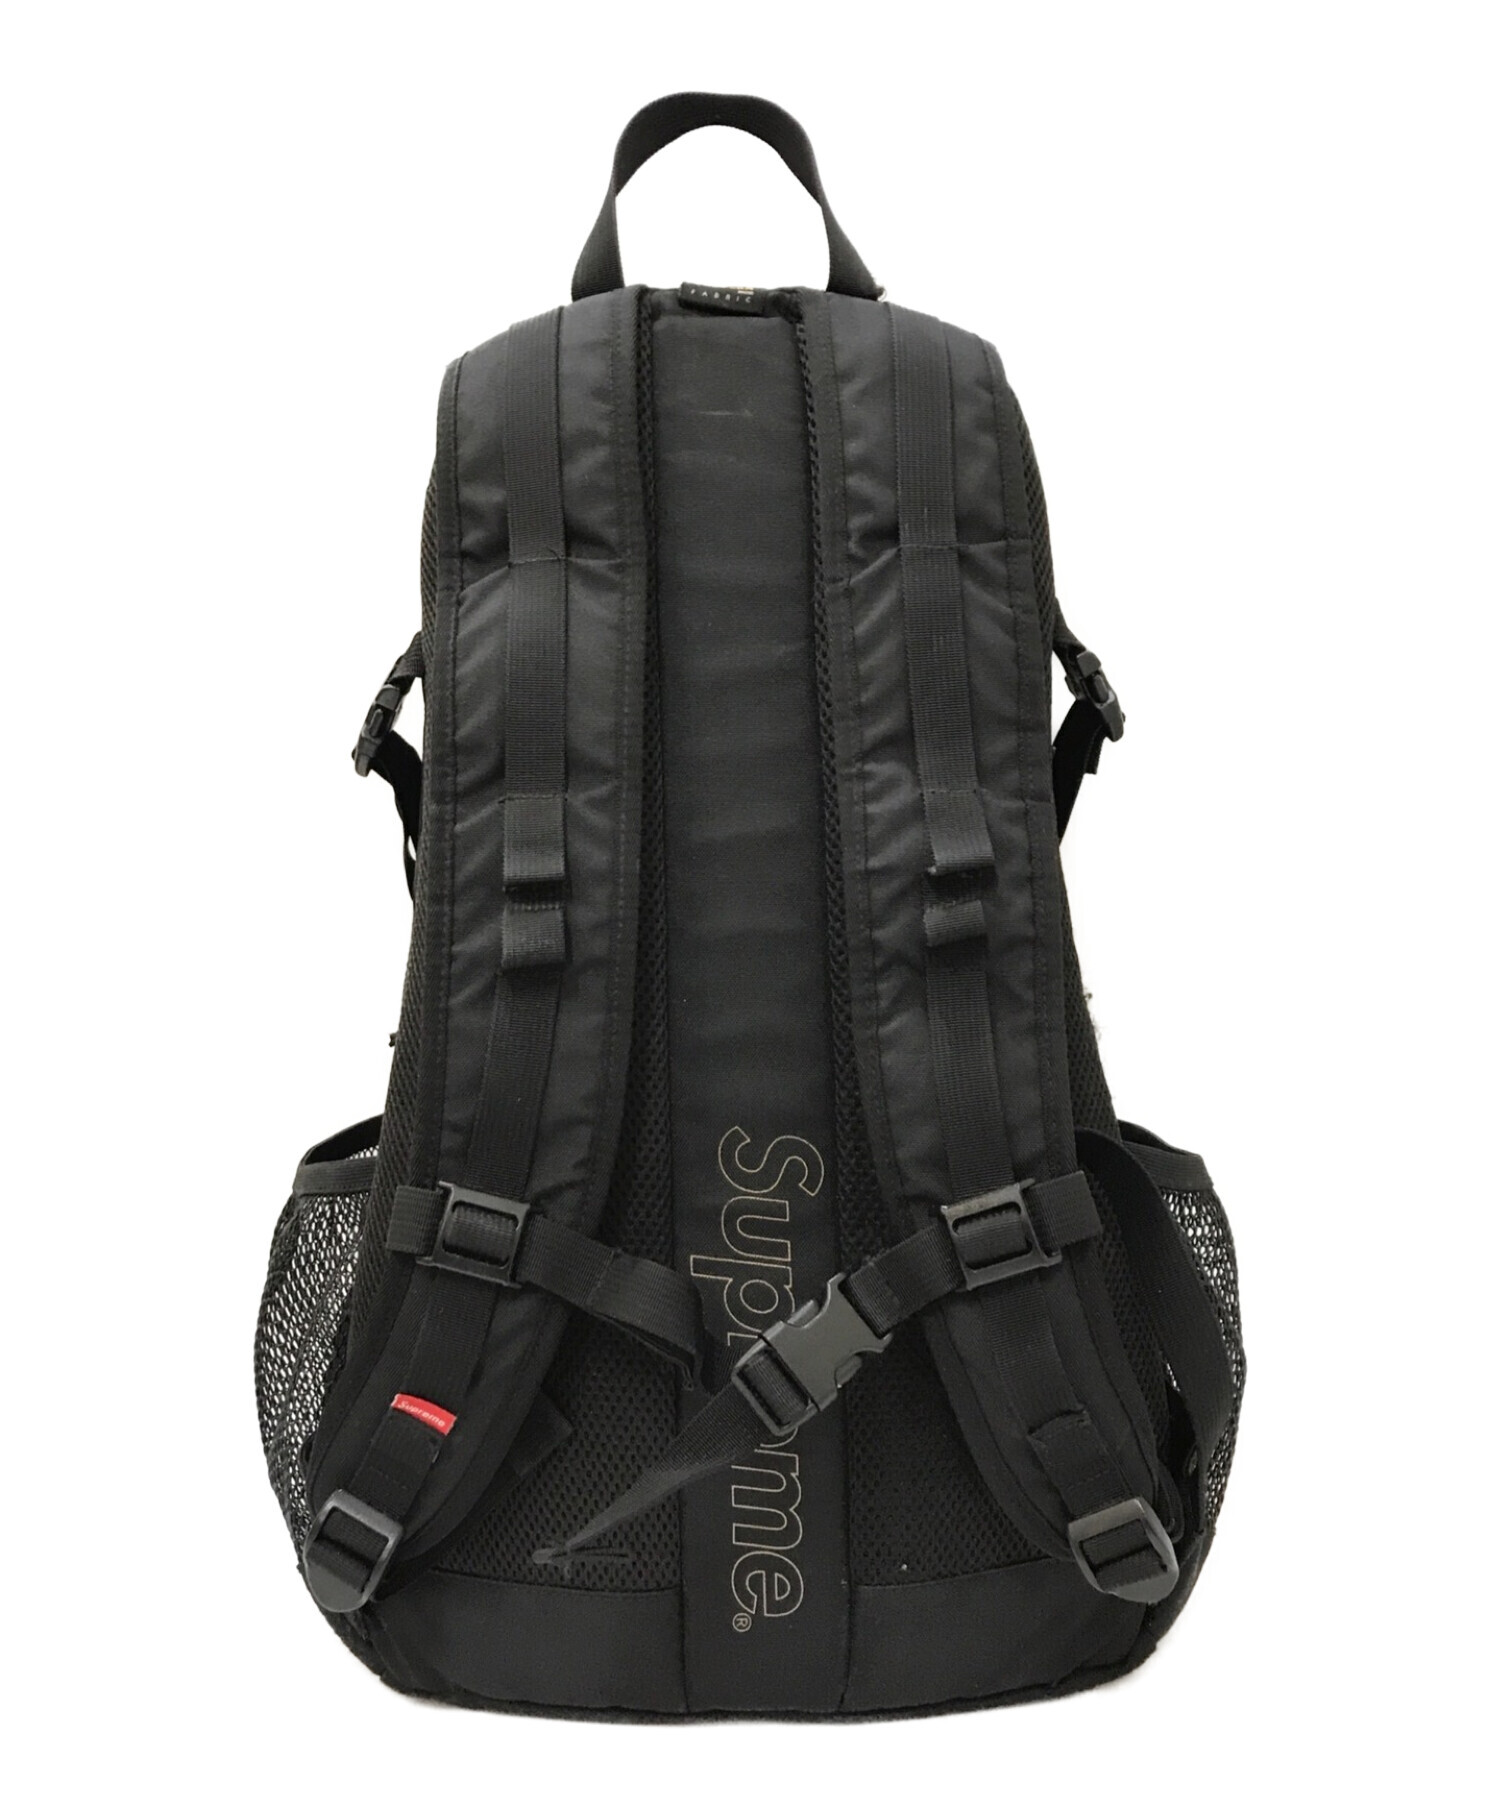 SUPREME (シュプリーム) 20SS Backpack ブラック